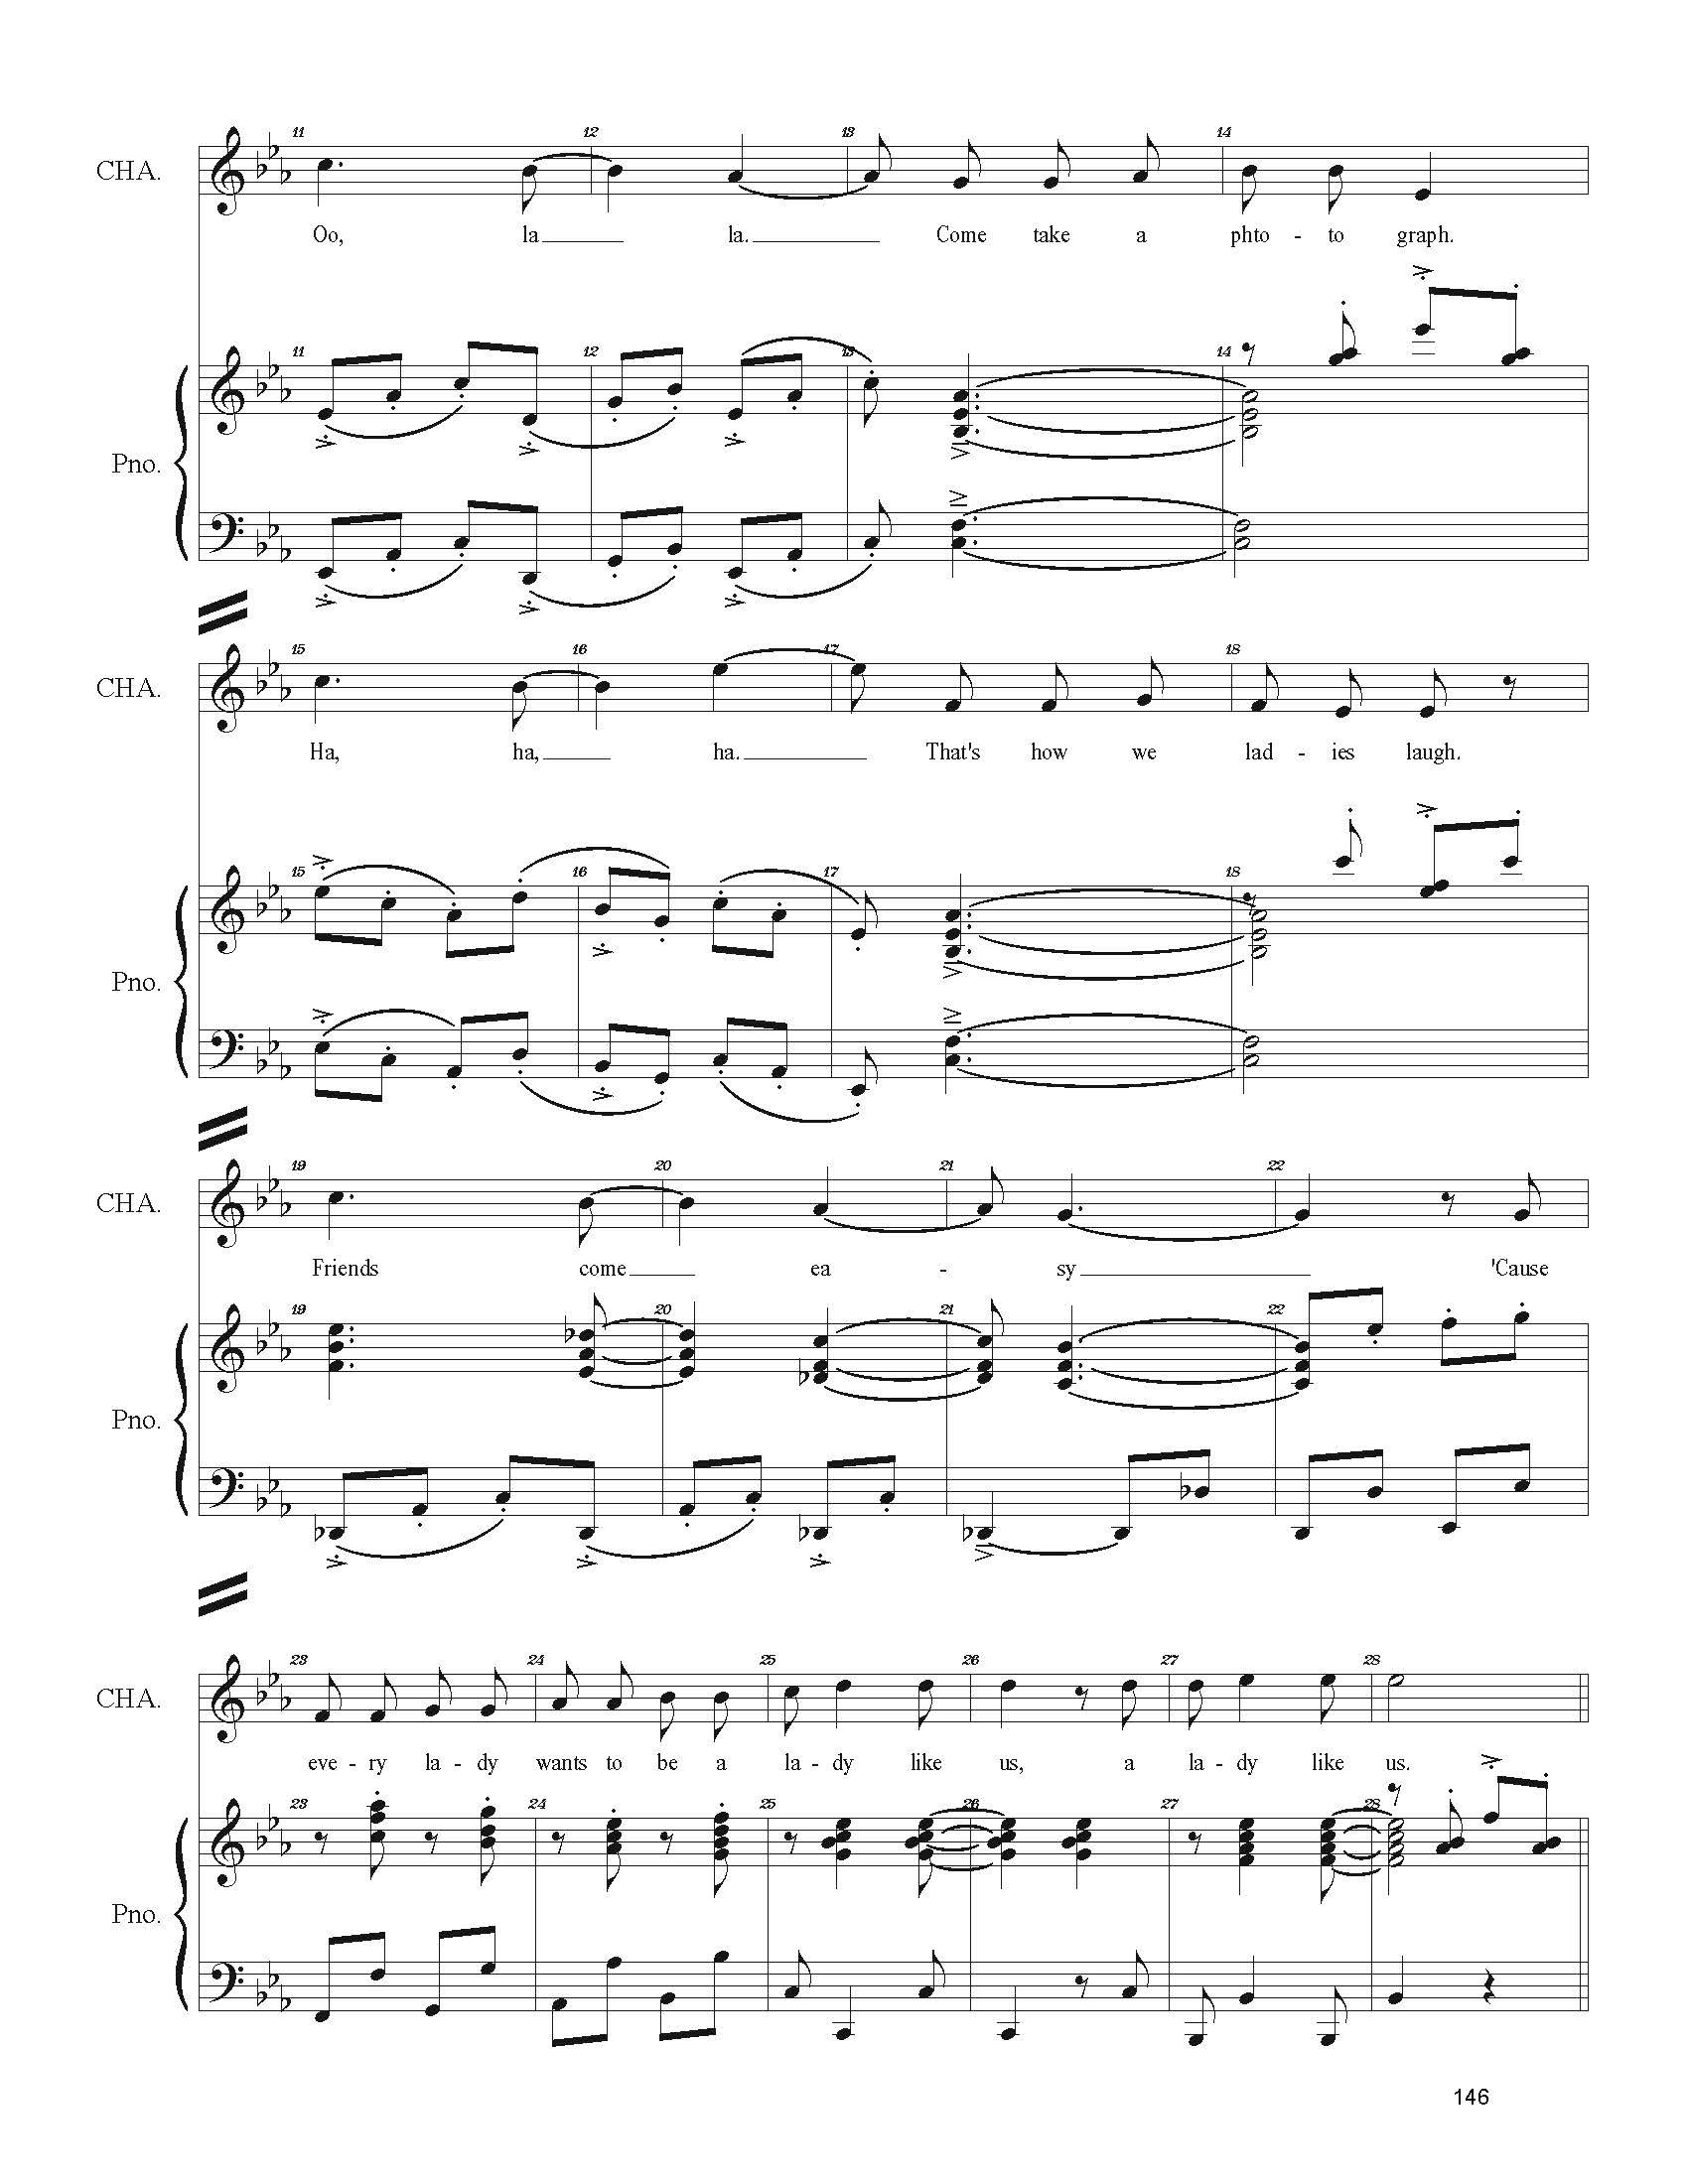 FULL PIANO VOCAL SCORE DRAFT 1 - Score_Page_146.jpg